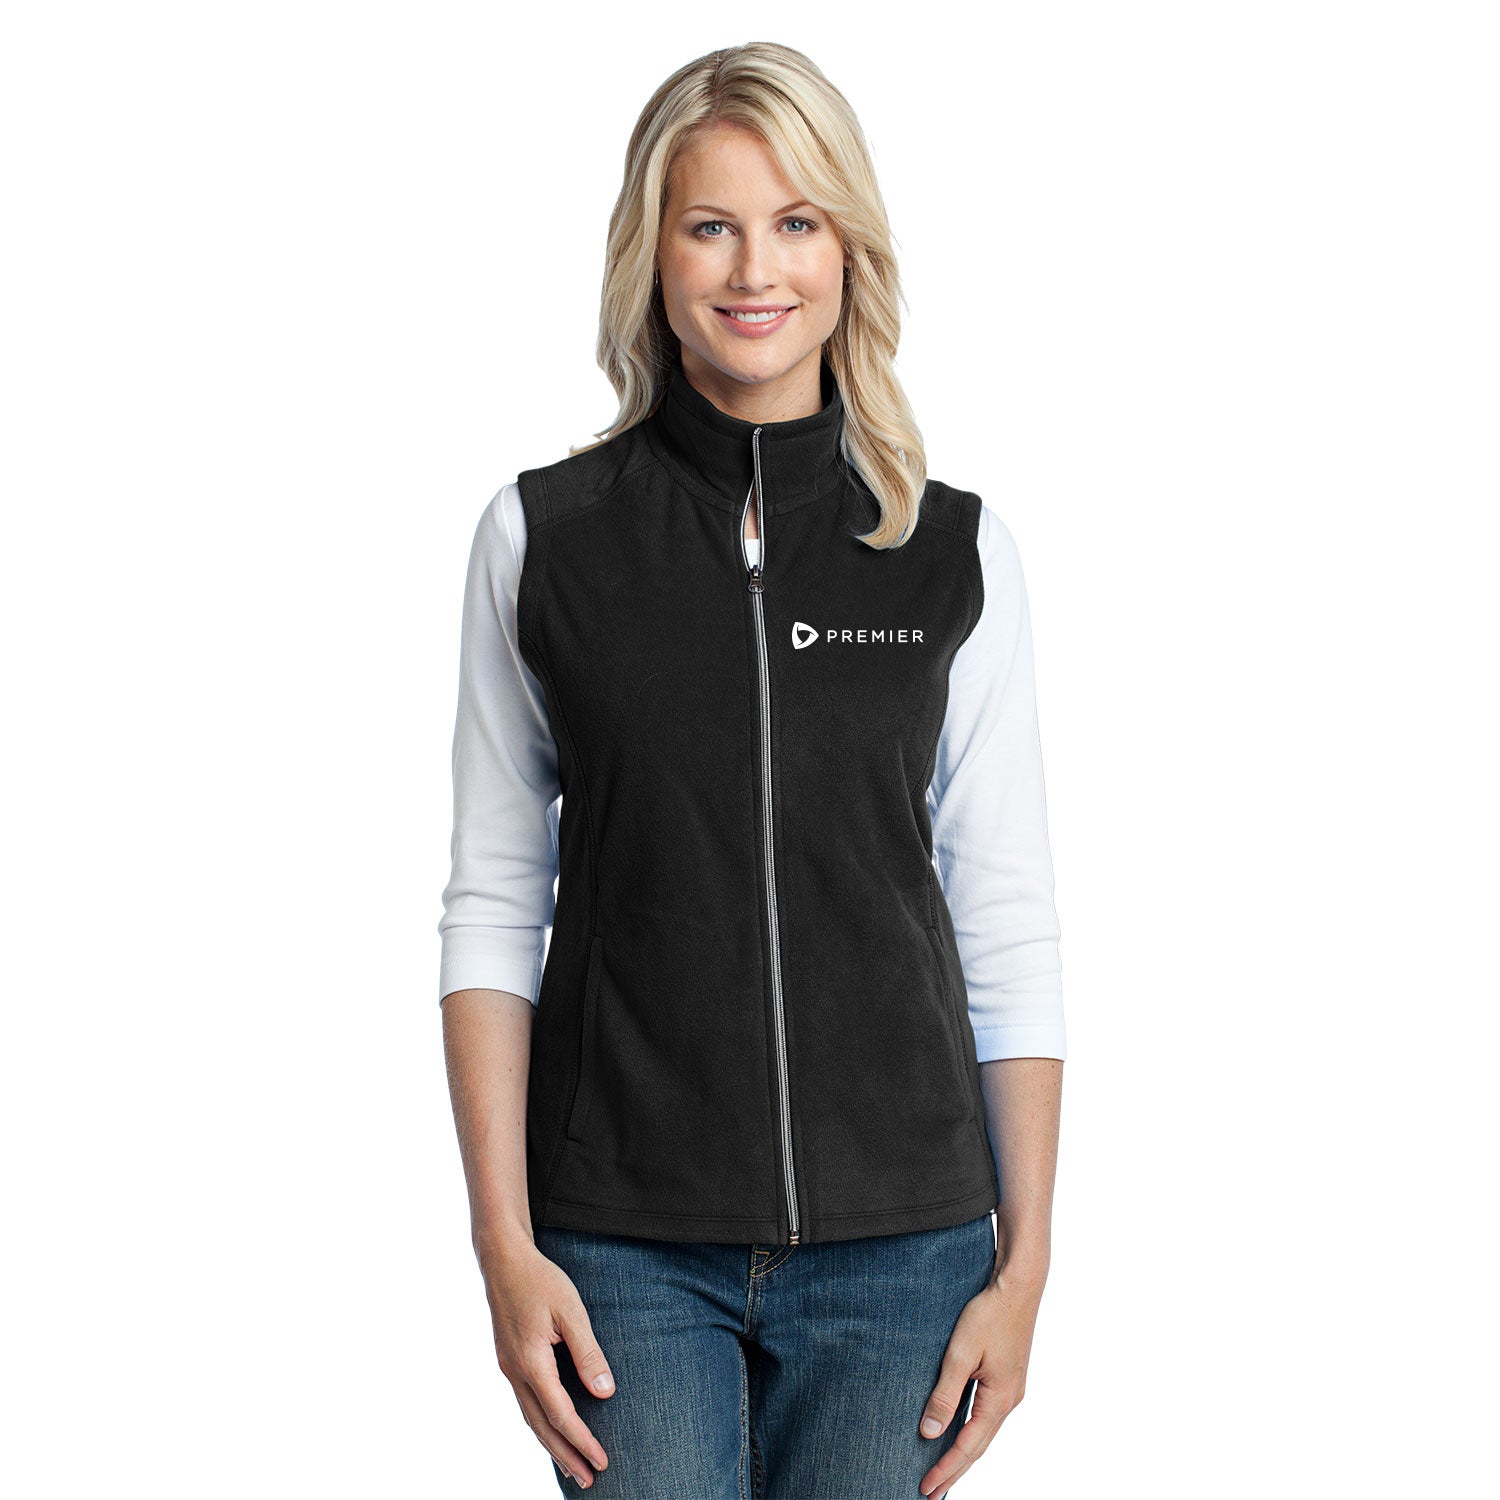 Premier Port Authority Ladies Microfleece Vest – The Premier Company Store